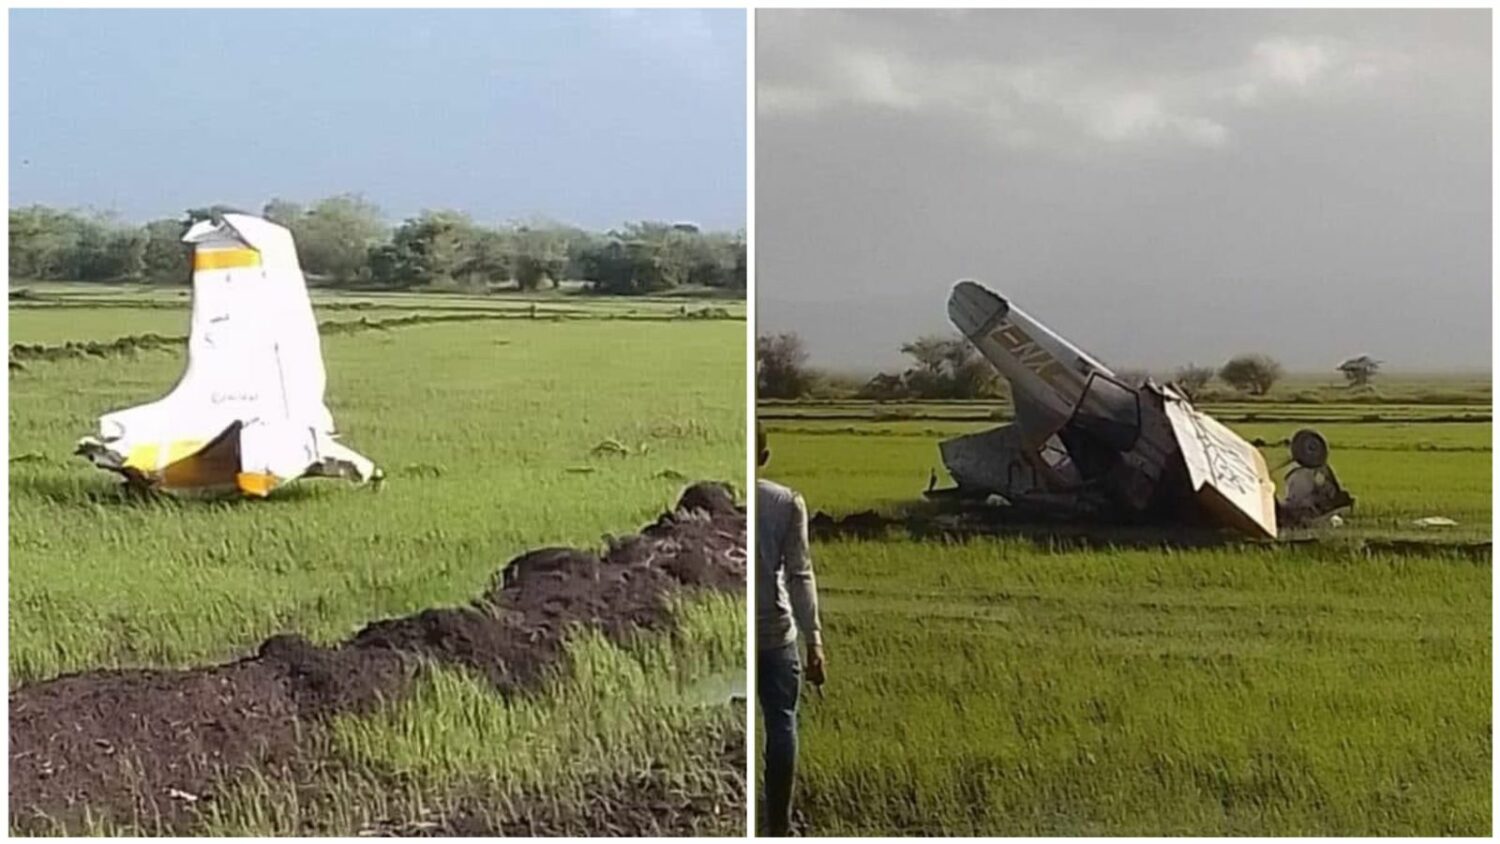 avioneta fumigadora impacta contra otra en una pista de aterrizaje en Granada Foto Nicaragua Actual